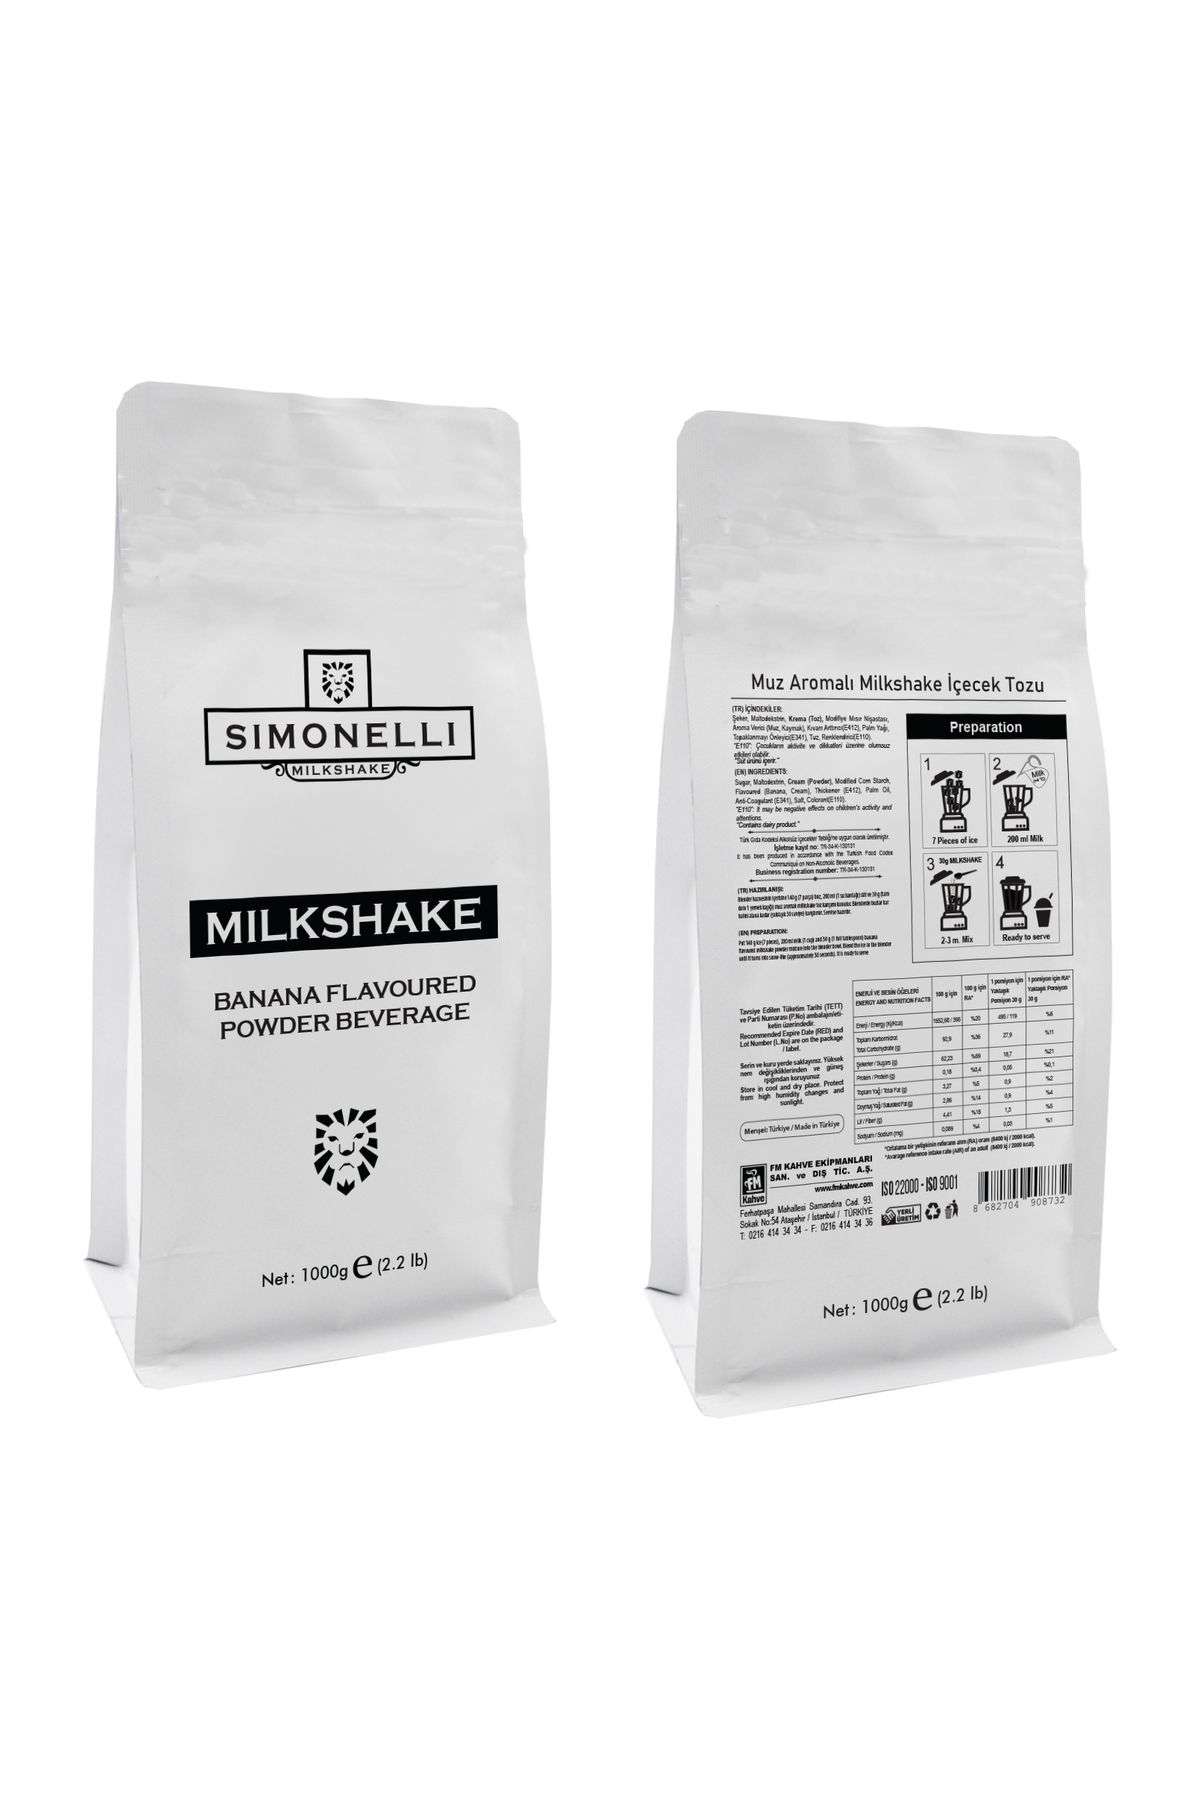 Simonelli Milkshake Muz Aromalı 1000g Paket